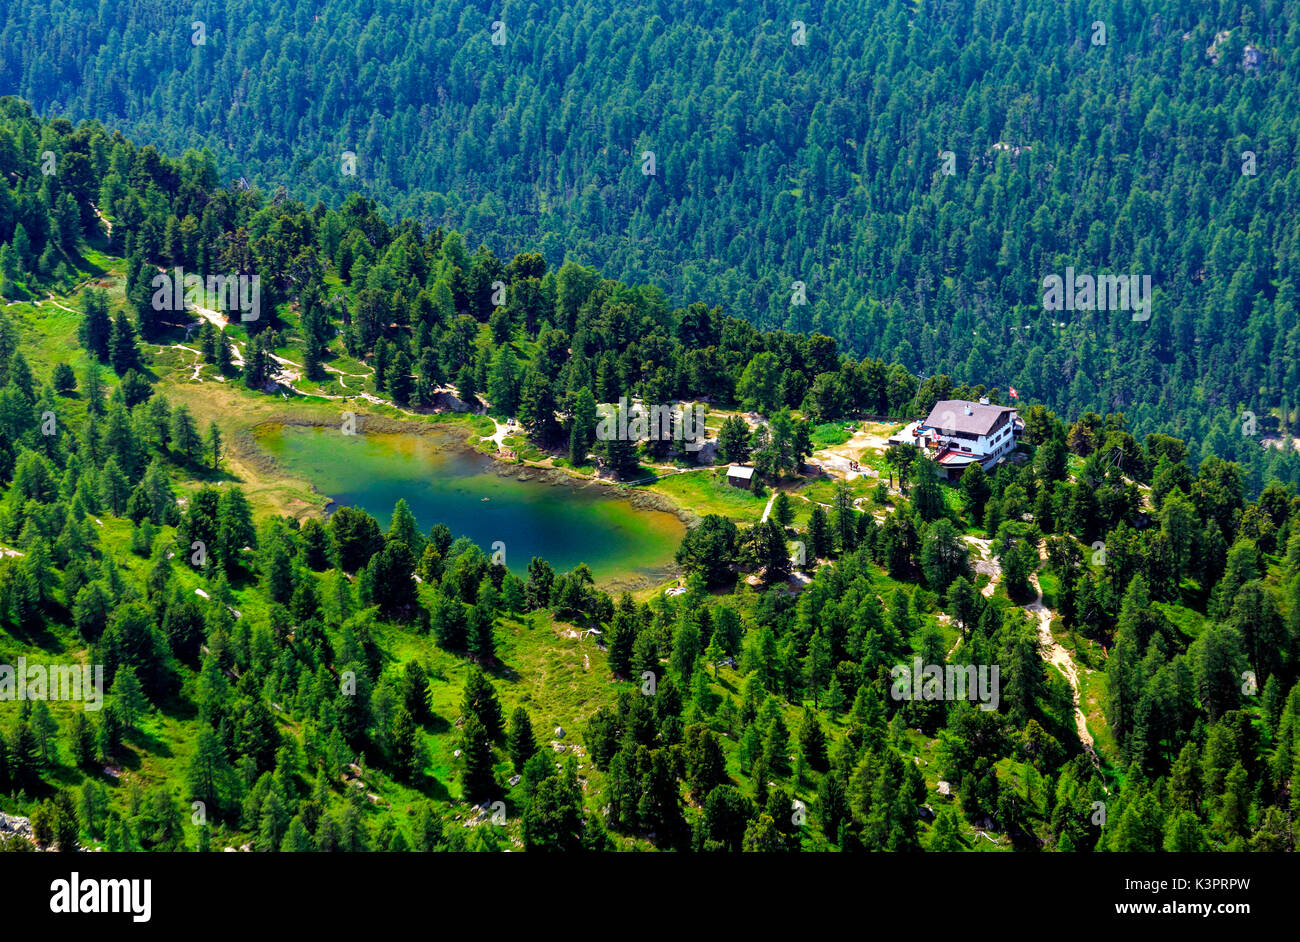 The lush Greenery of Lake Dals Chods,St Moritz, Switzerland Stock Photo